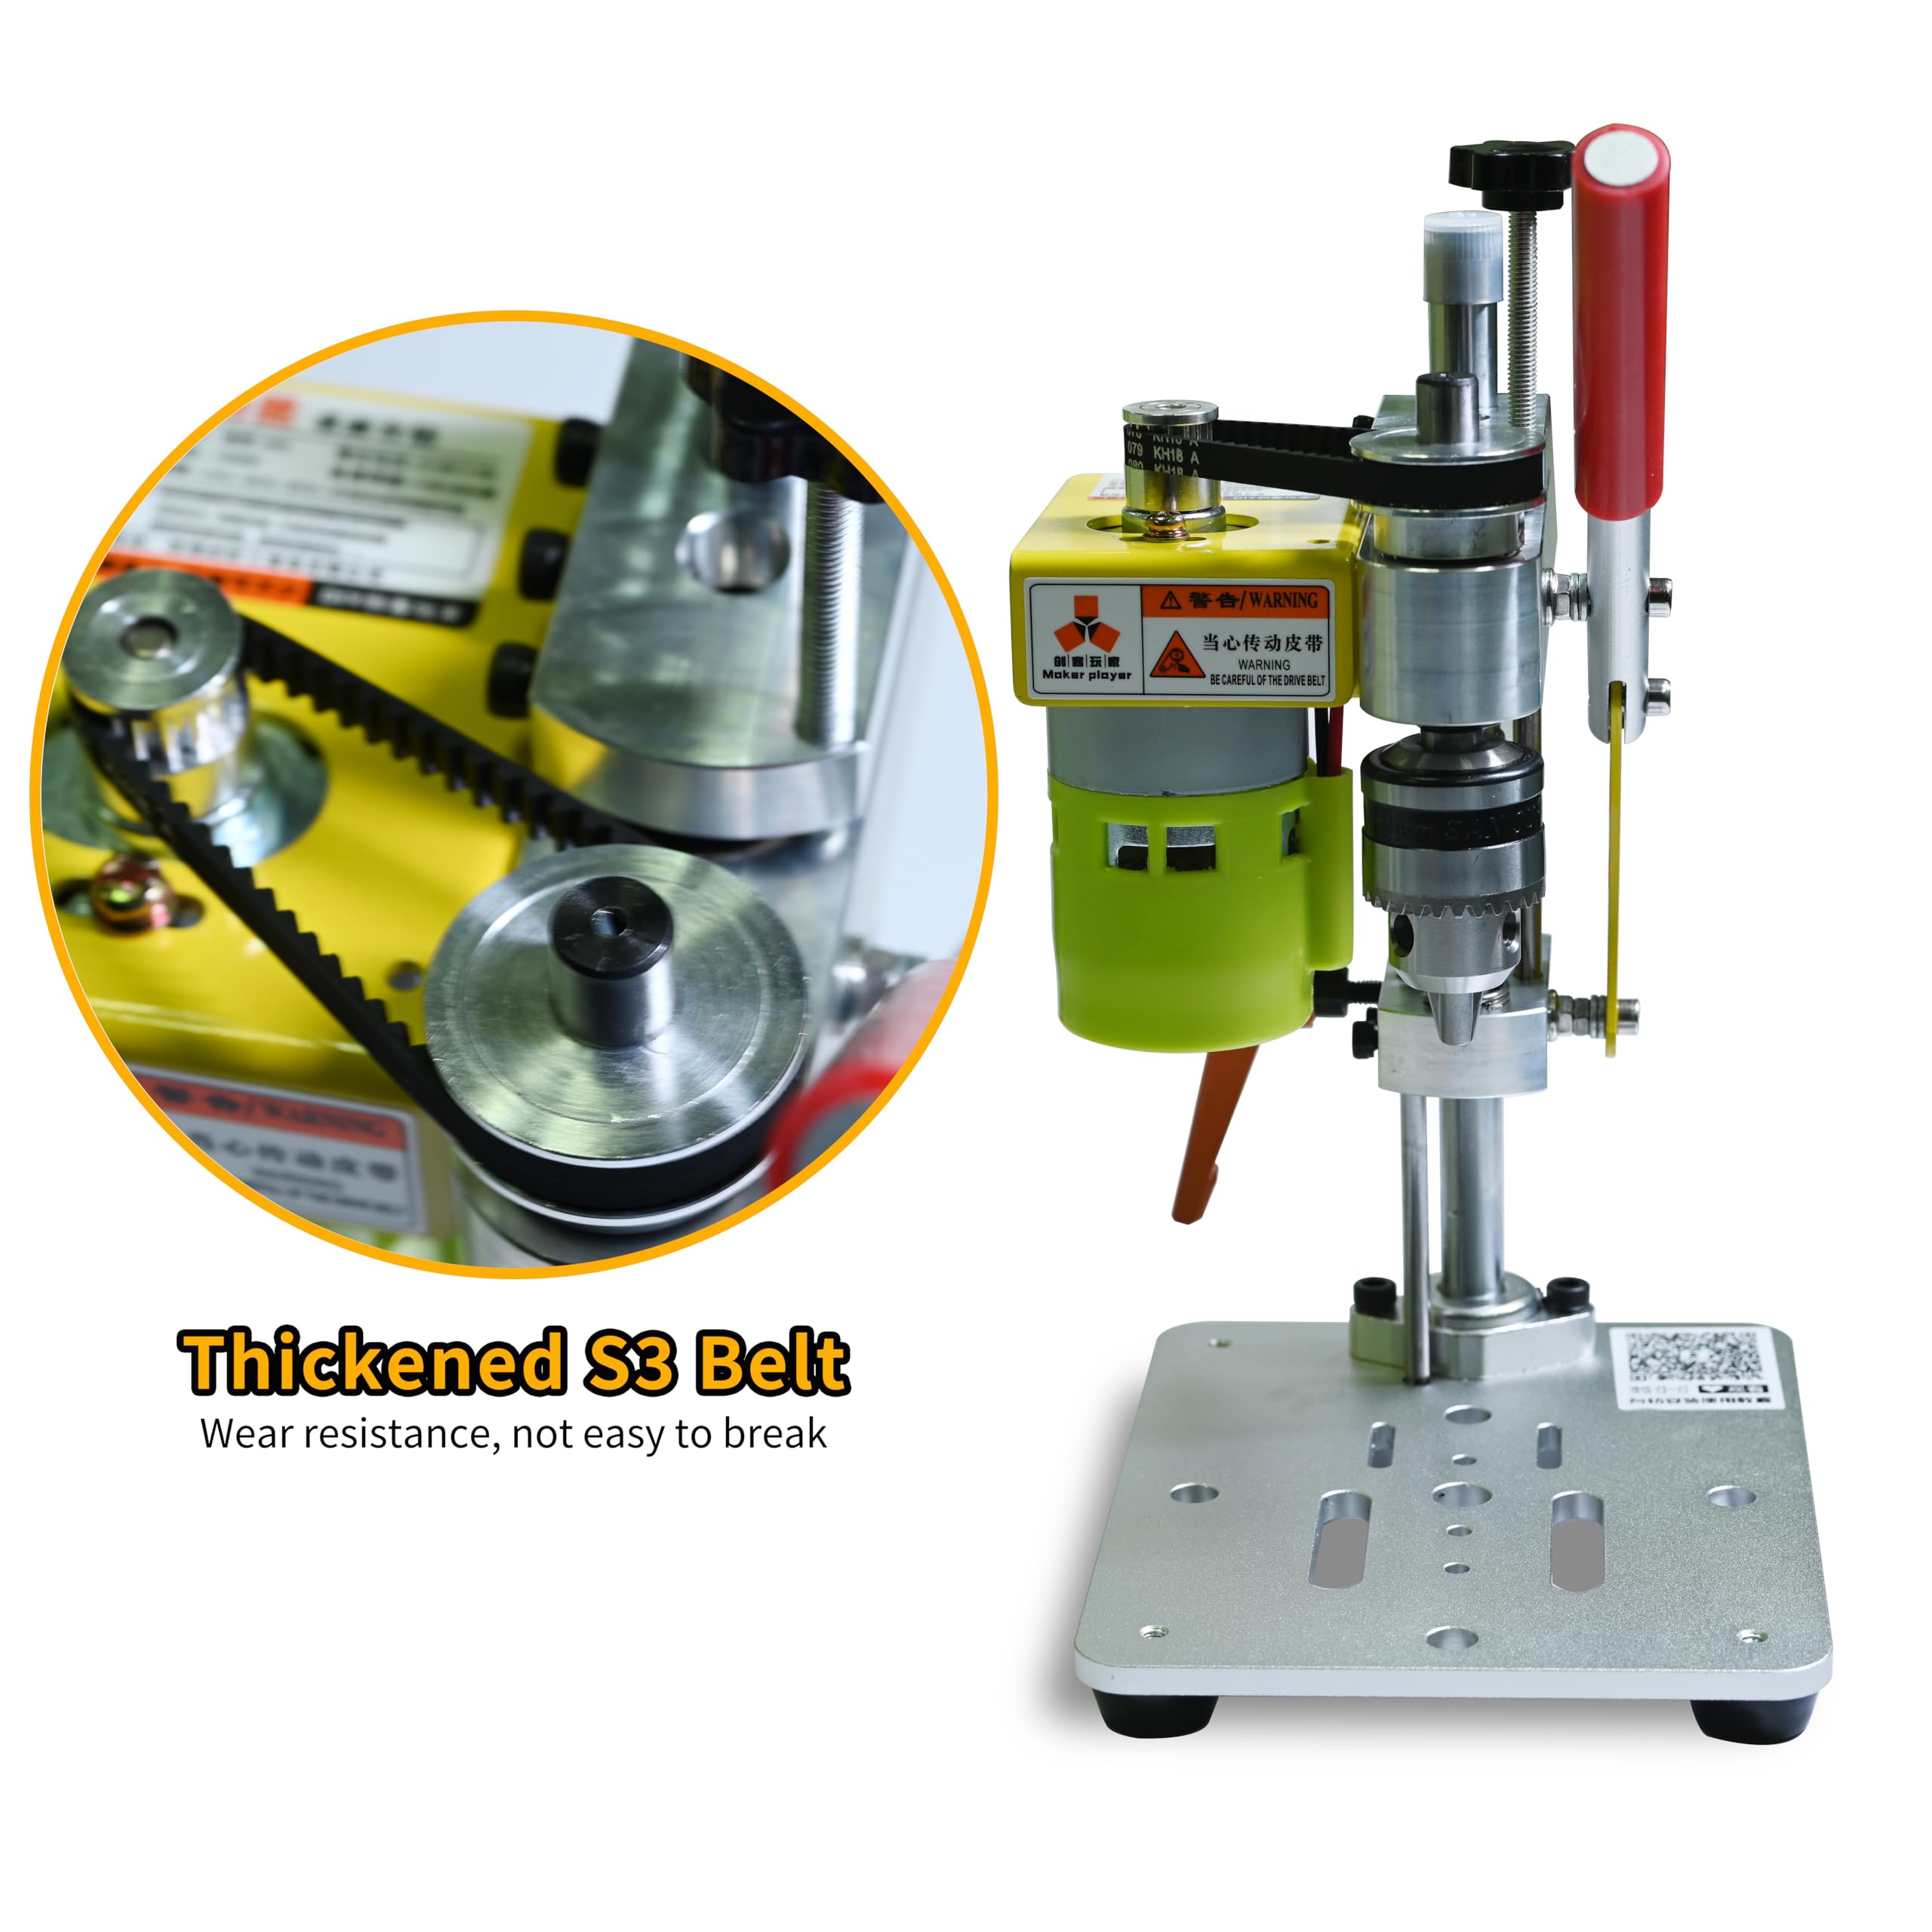 Electric Mini Drill Press, Precision Benchtop Drill Press, Two-way Hand Drill Press, 7 Speed Drilling Machine w/ B10 Chuck for 0.6-6mm Bits, Mefape DIY Metal Woodworking Jewelry Drill Tool